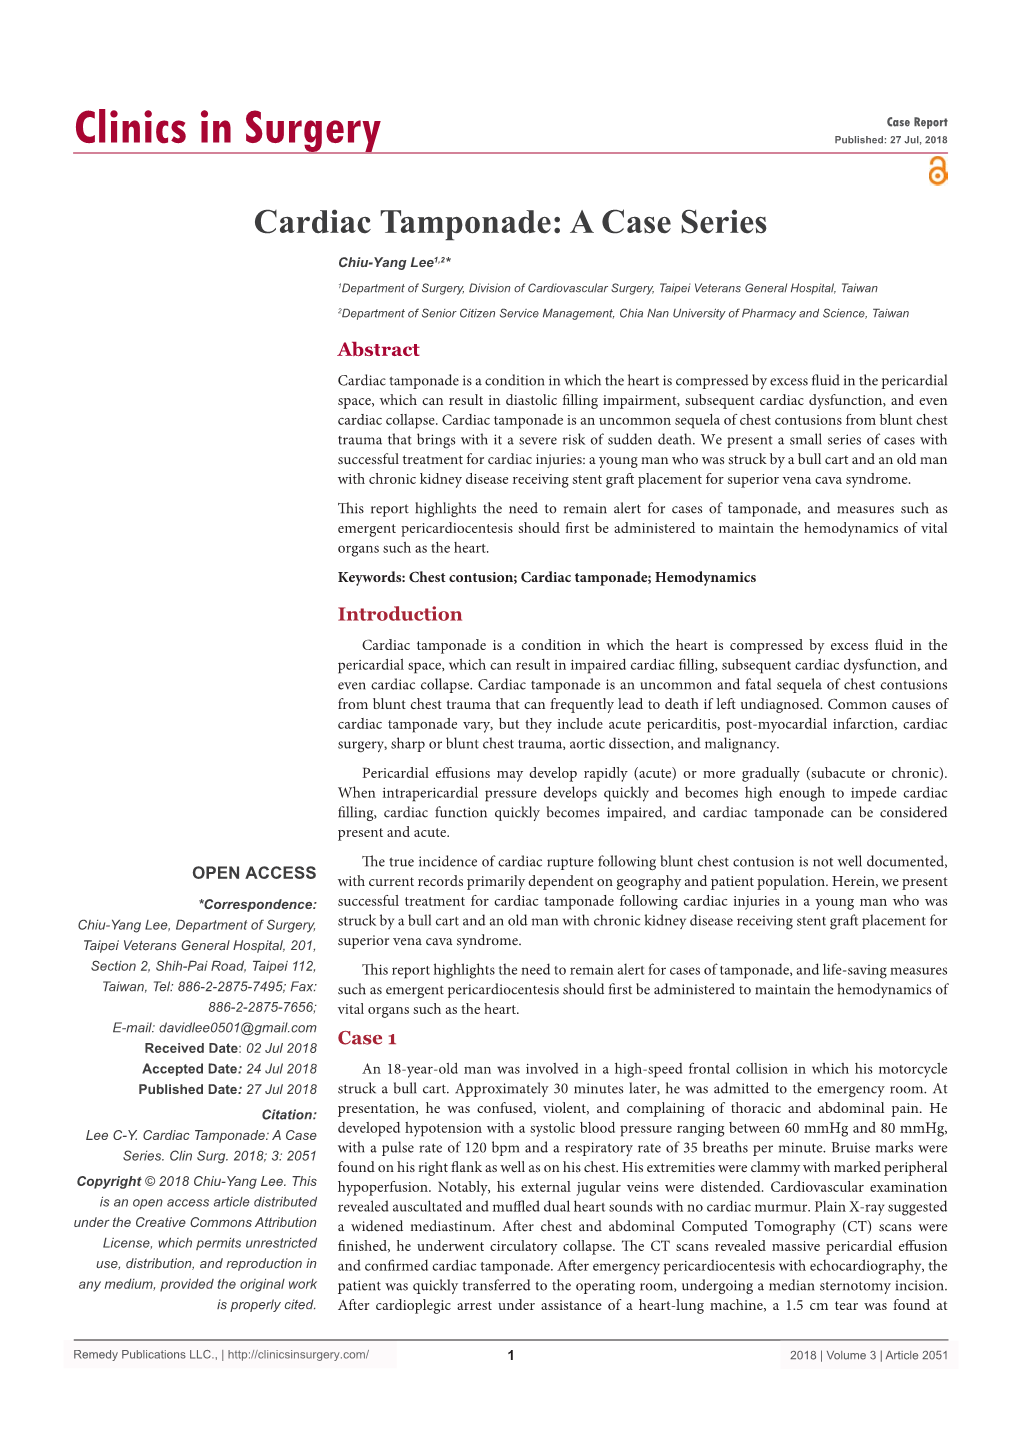 Cardiac Tamponade: a Case Series